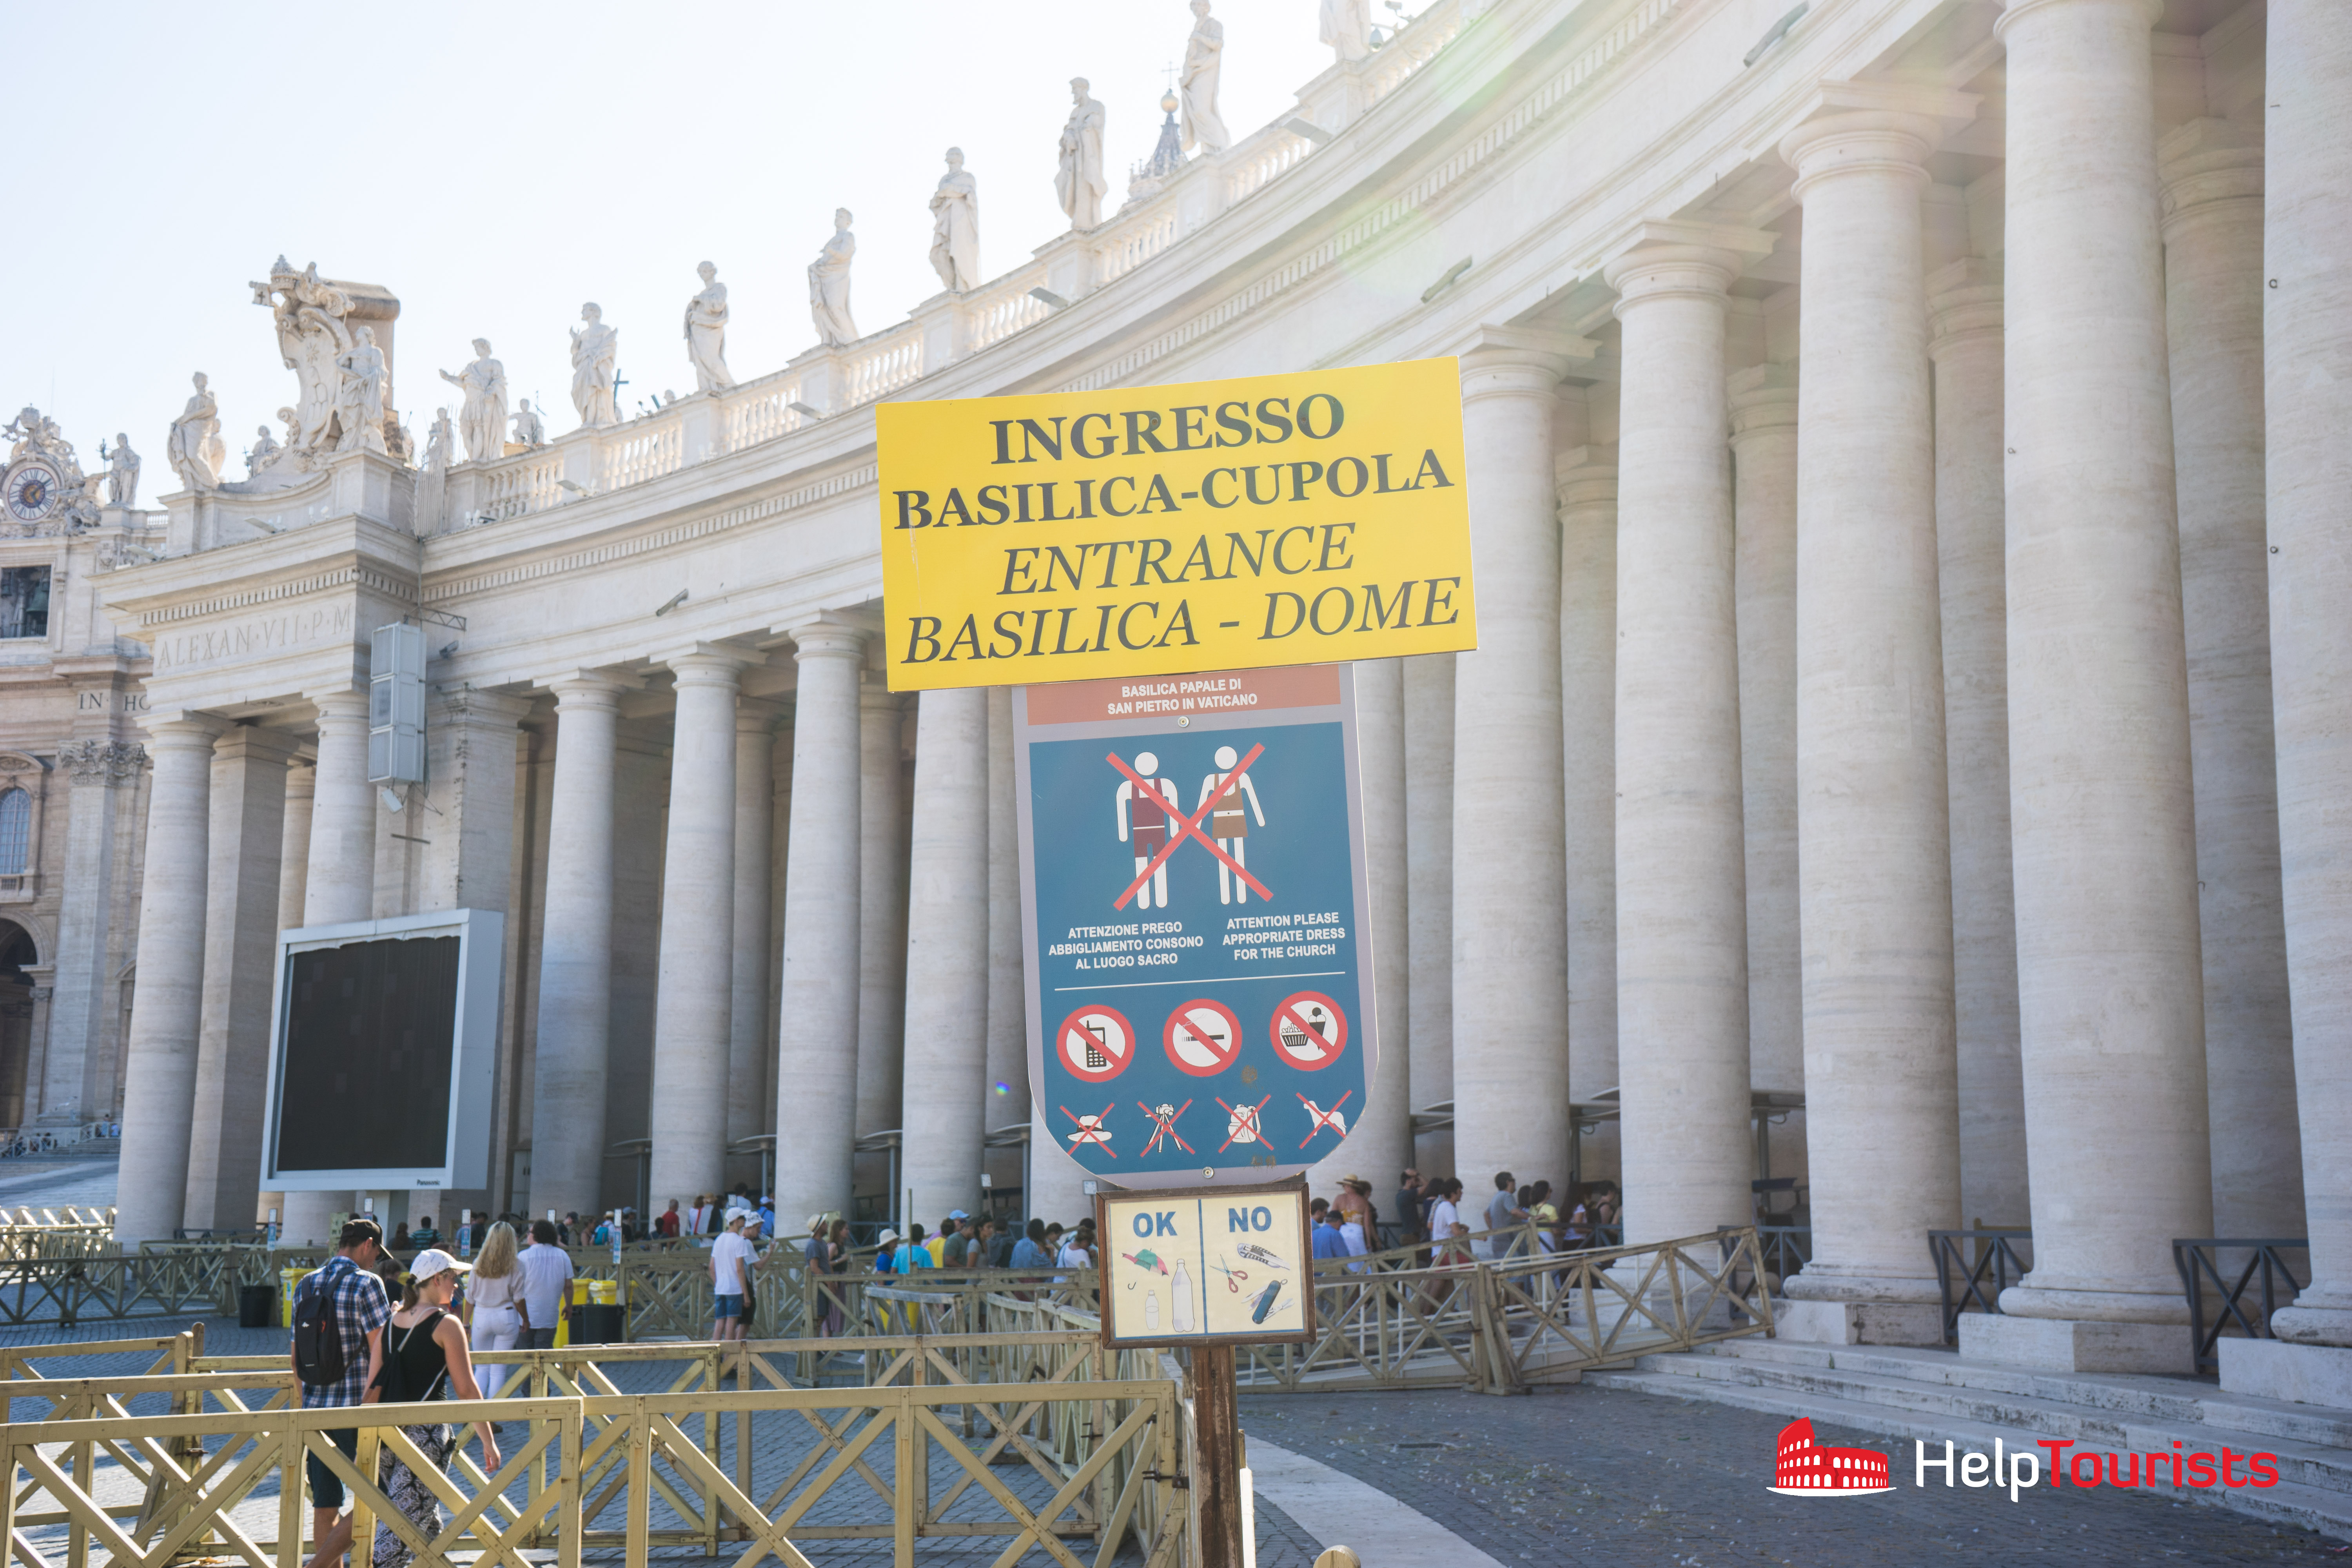 ROME_St_Peter's_Basilica_dress_code_sign_02_l